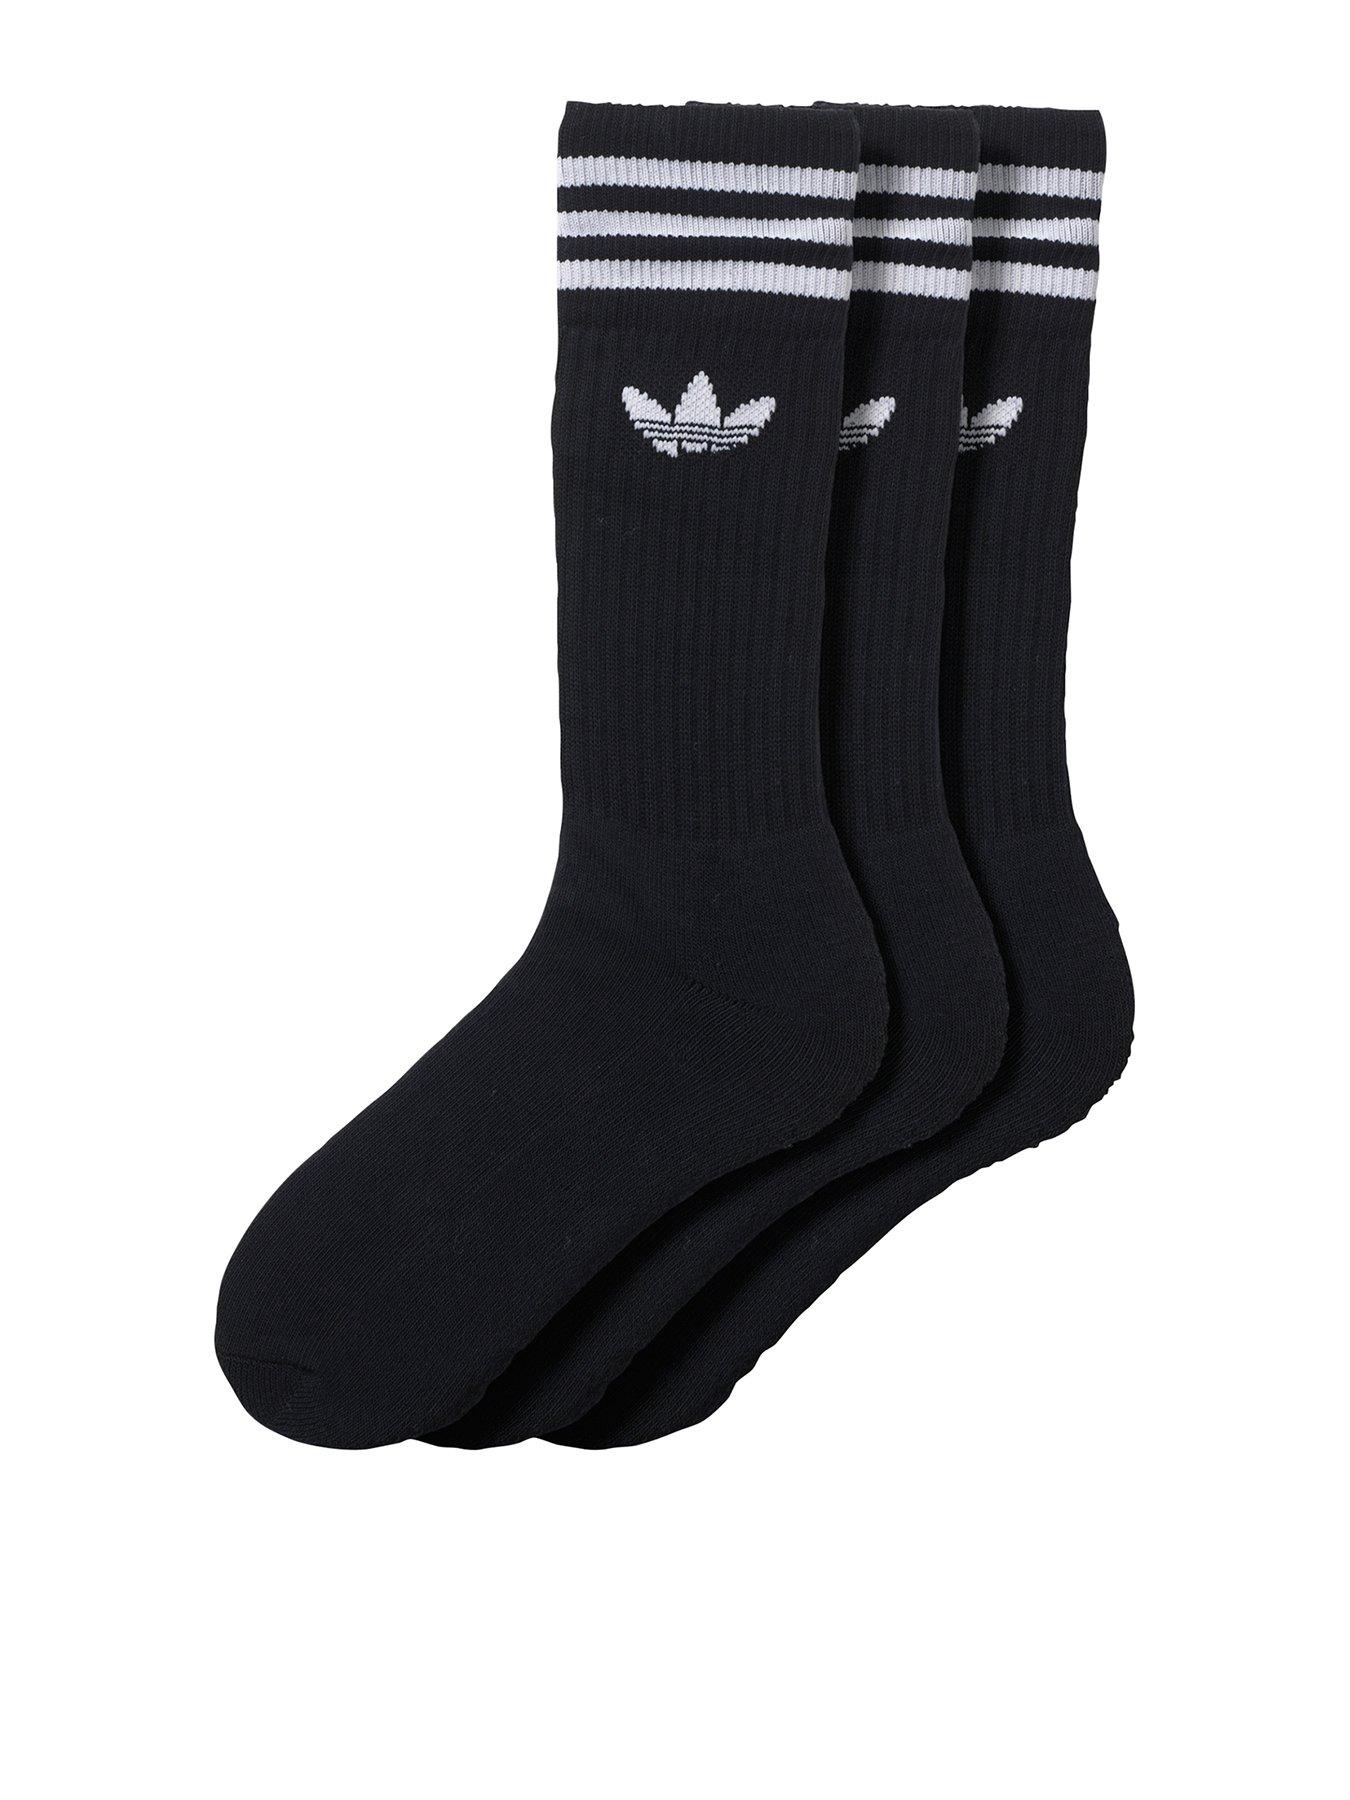 adidas crew socks black